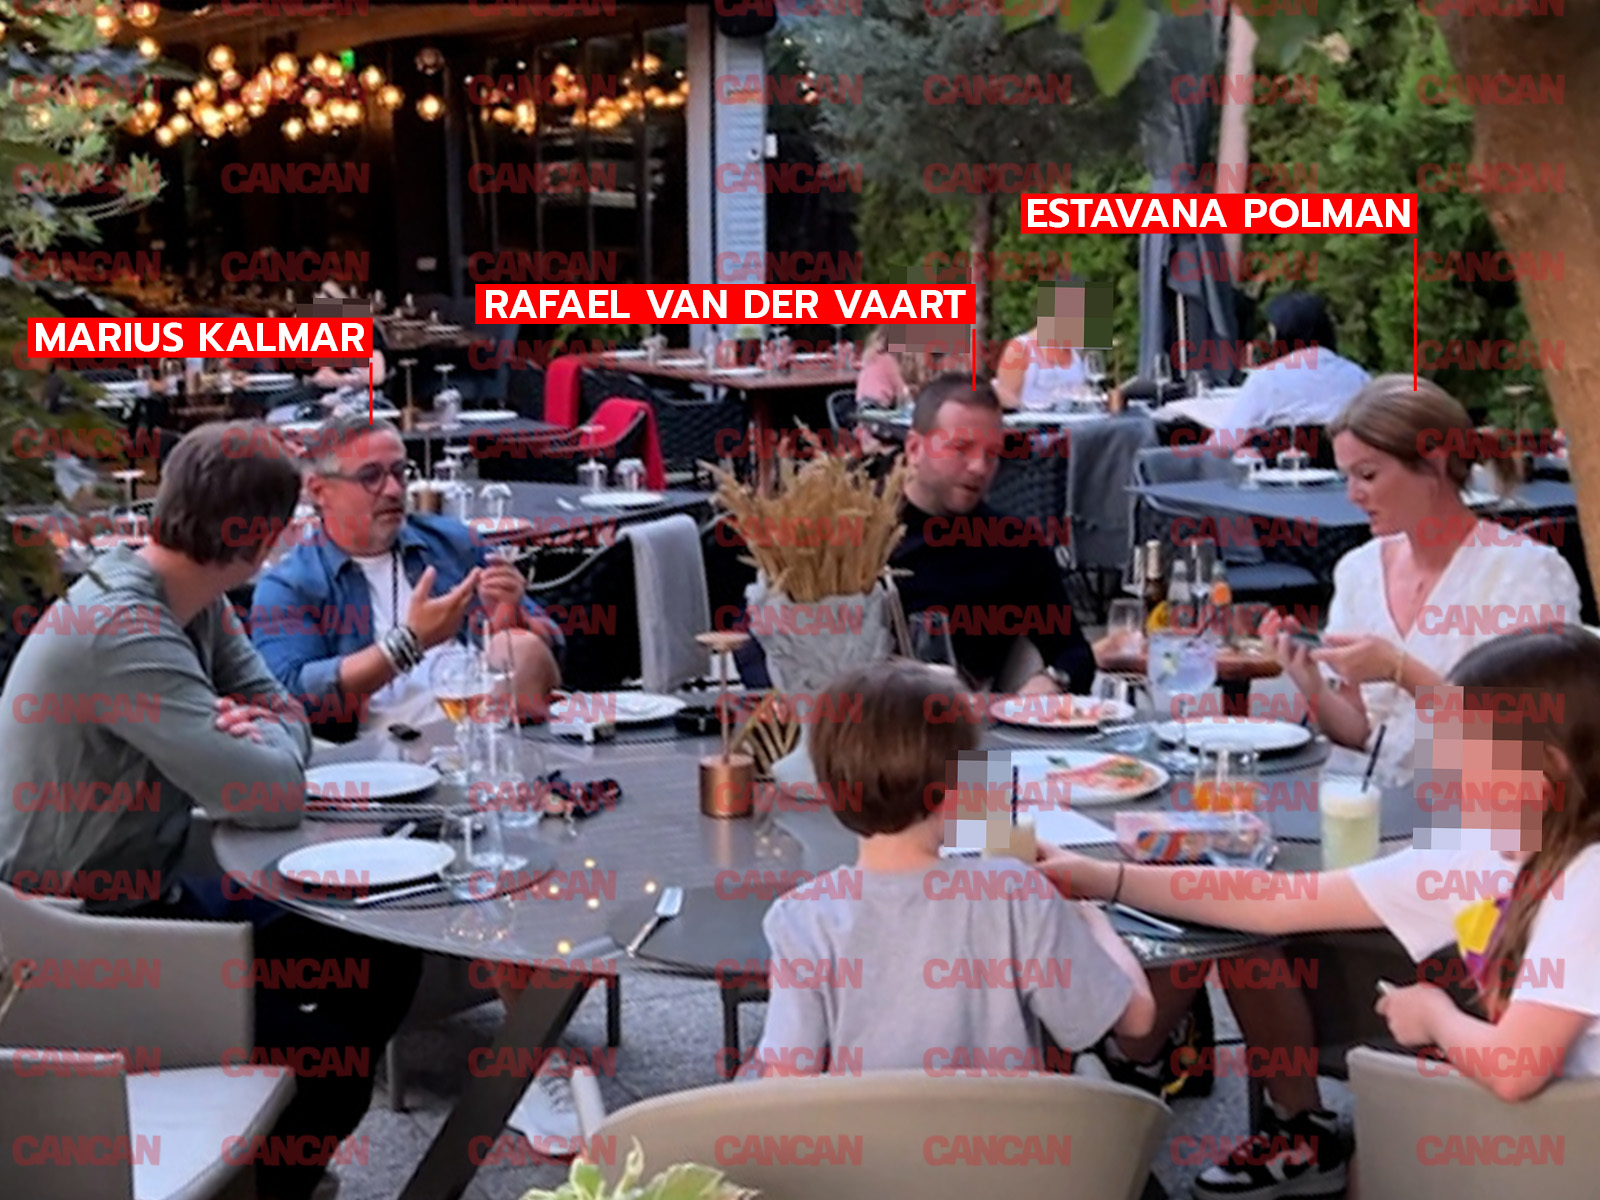 La invitația lui Marius Kalmar, Rafael van der Vaart și Estavana Polman au luat cina la IL LOCALE